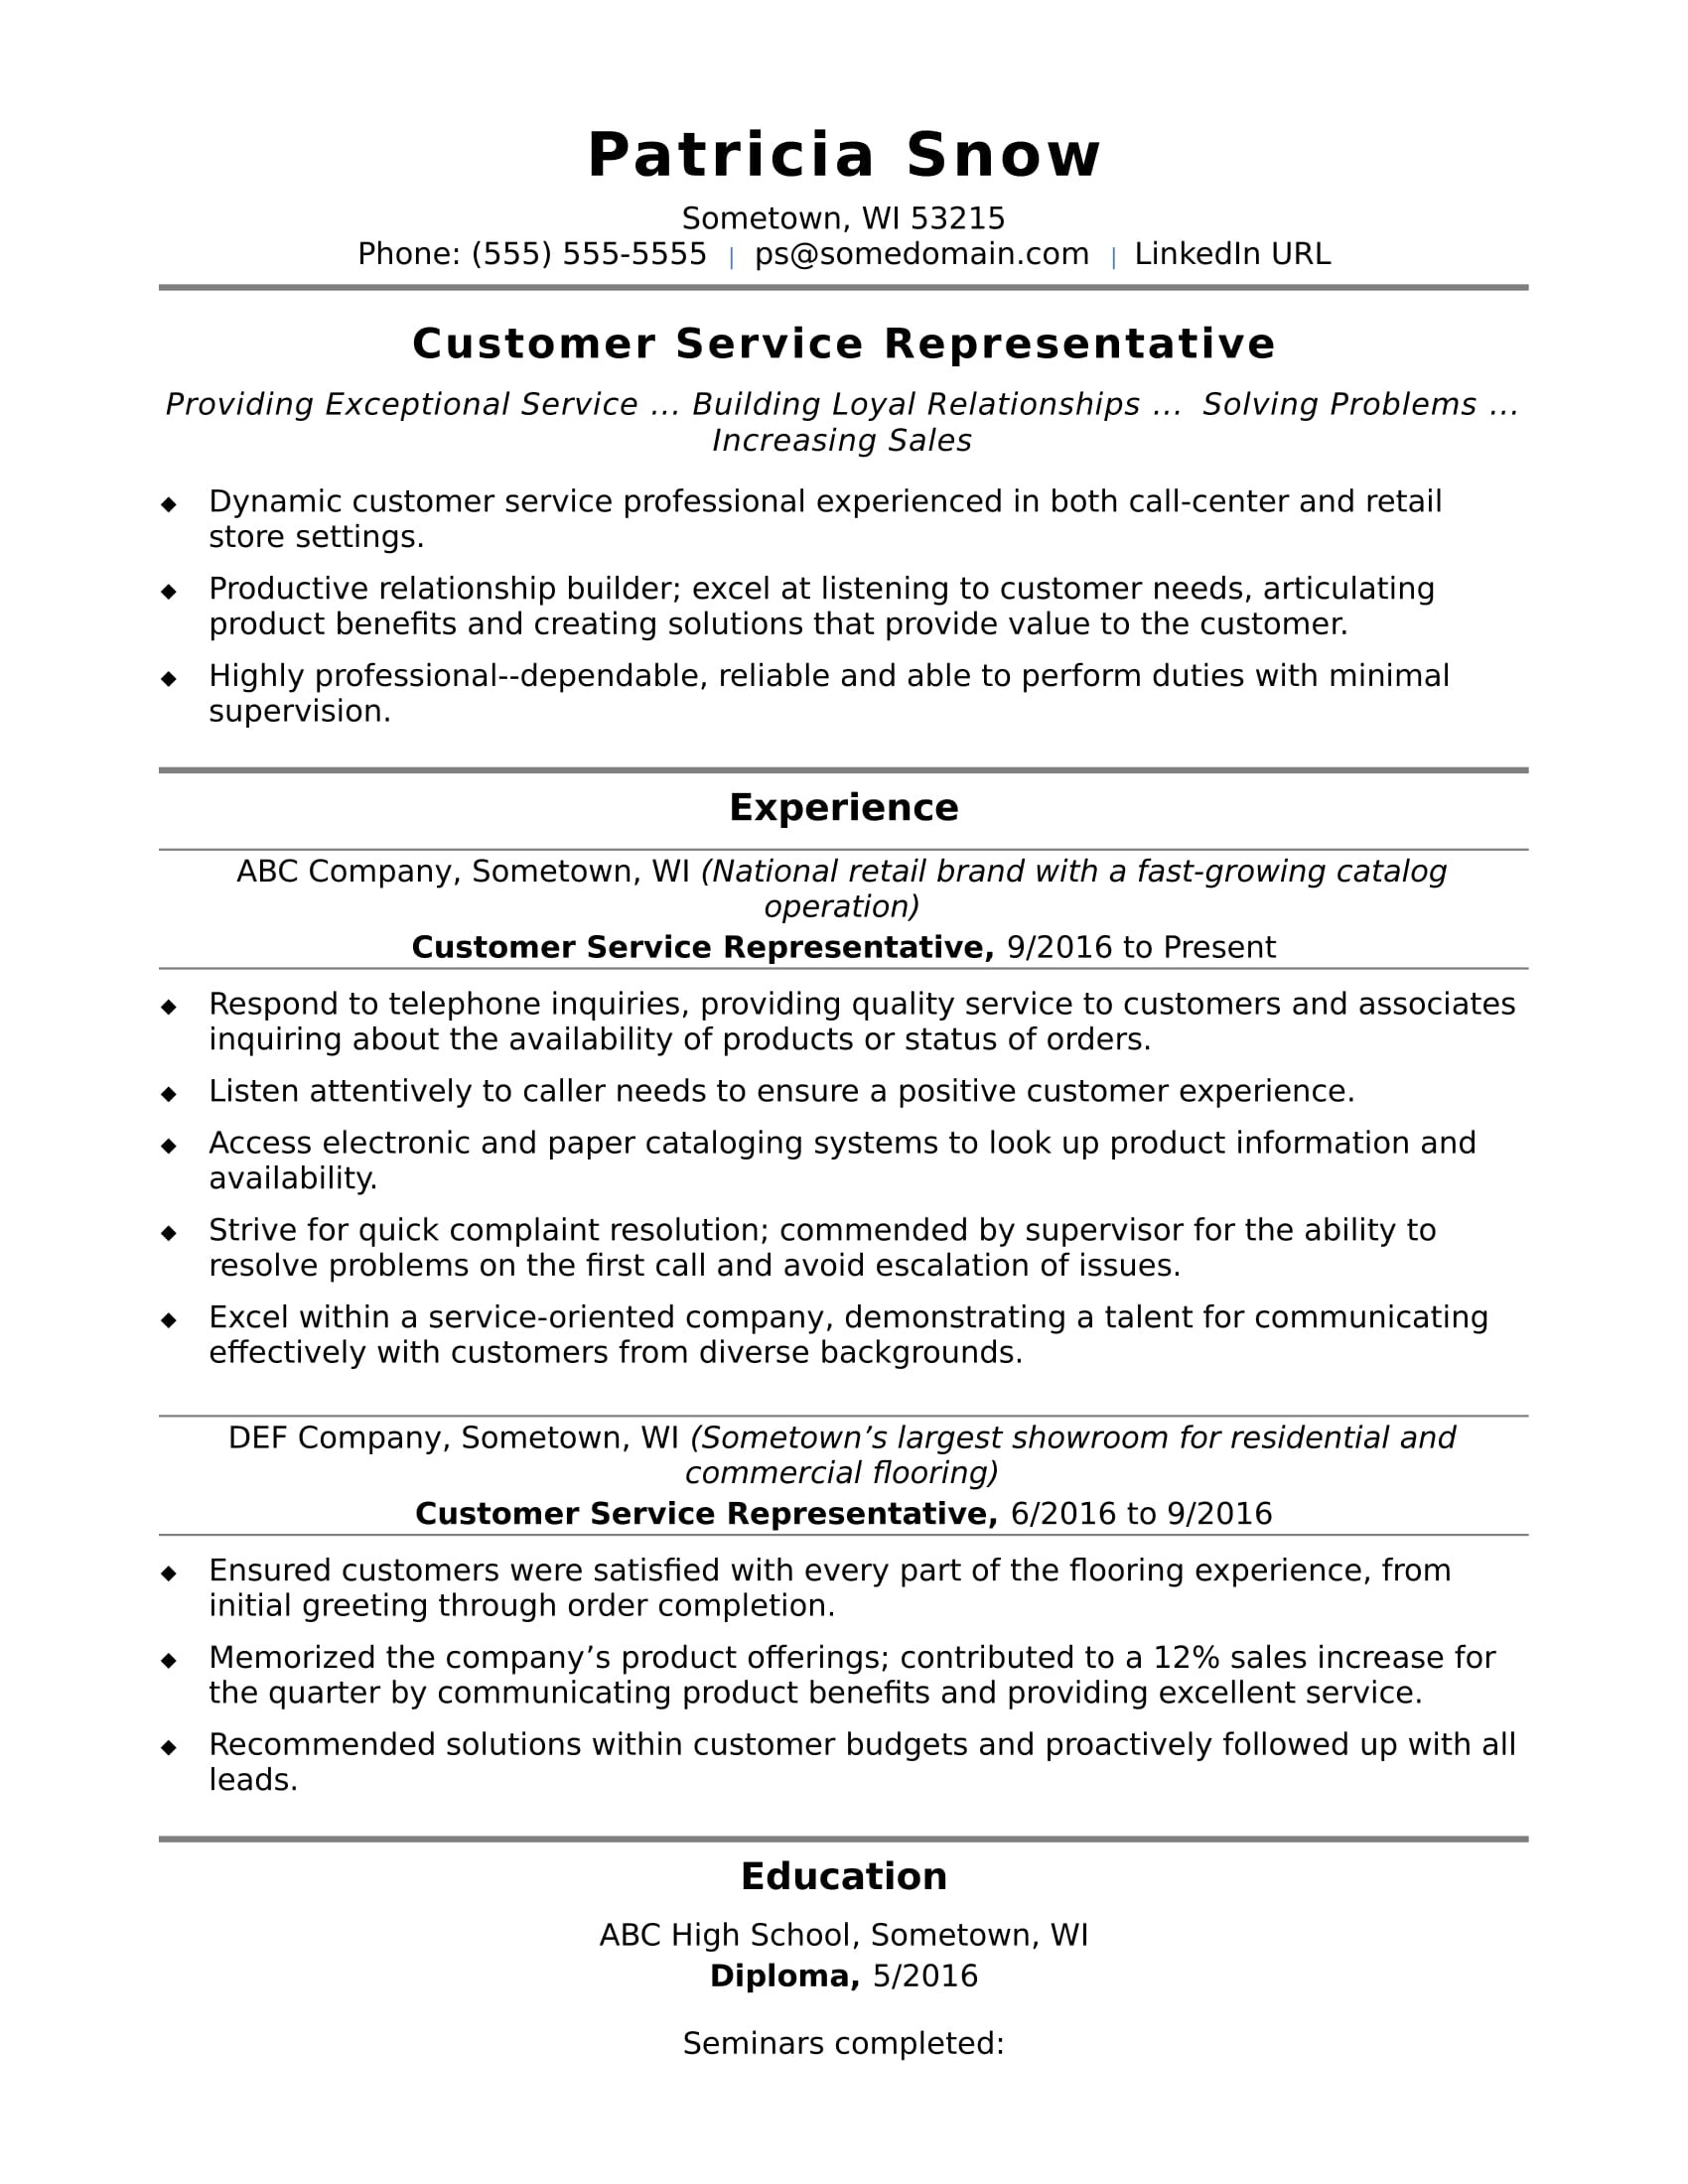 Sample Functional Resume Customer Service Representative Customer Service Representative Resume Sample Monster.com